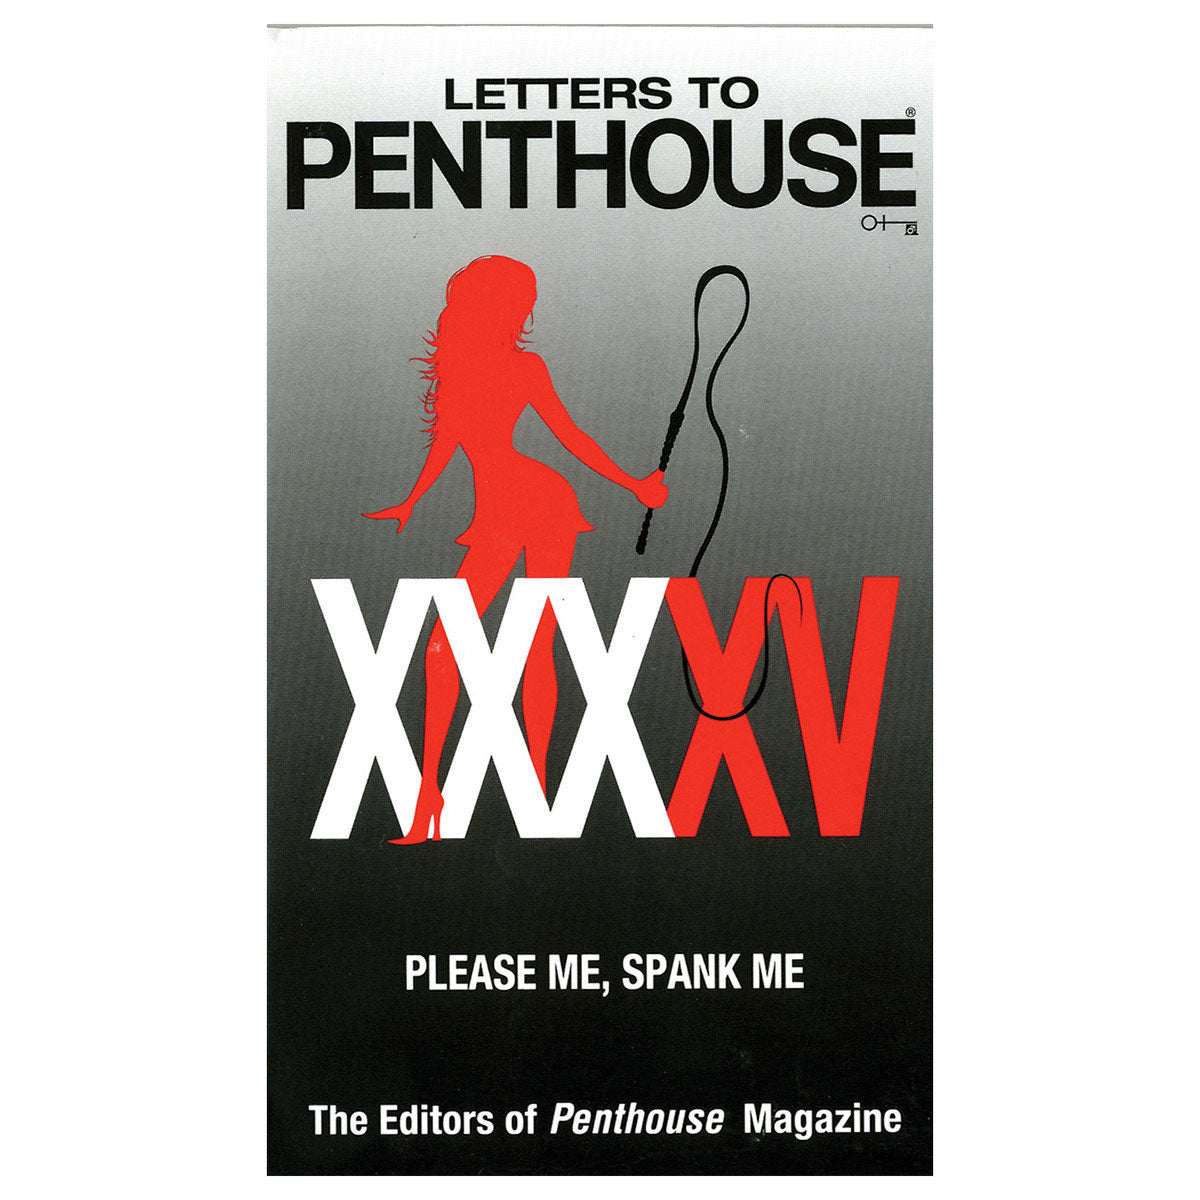 Letters to Penthouse XXXXV